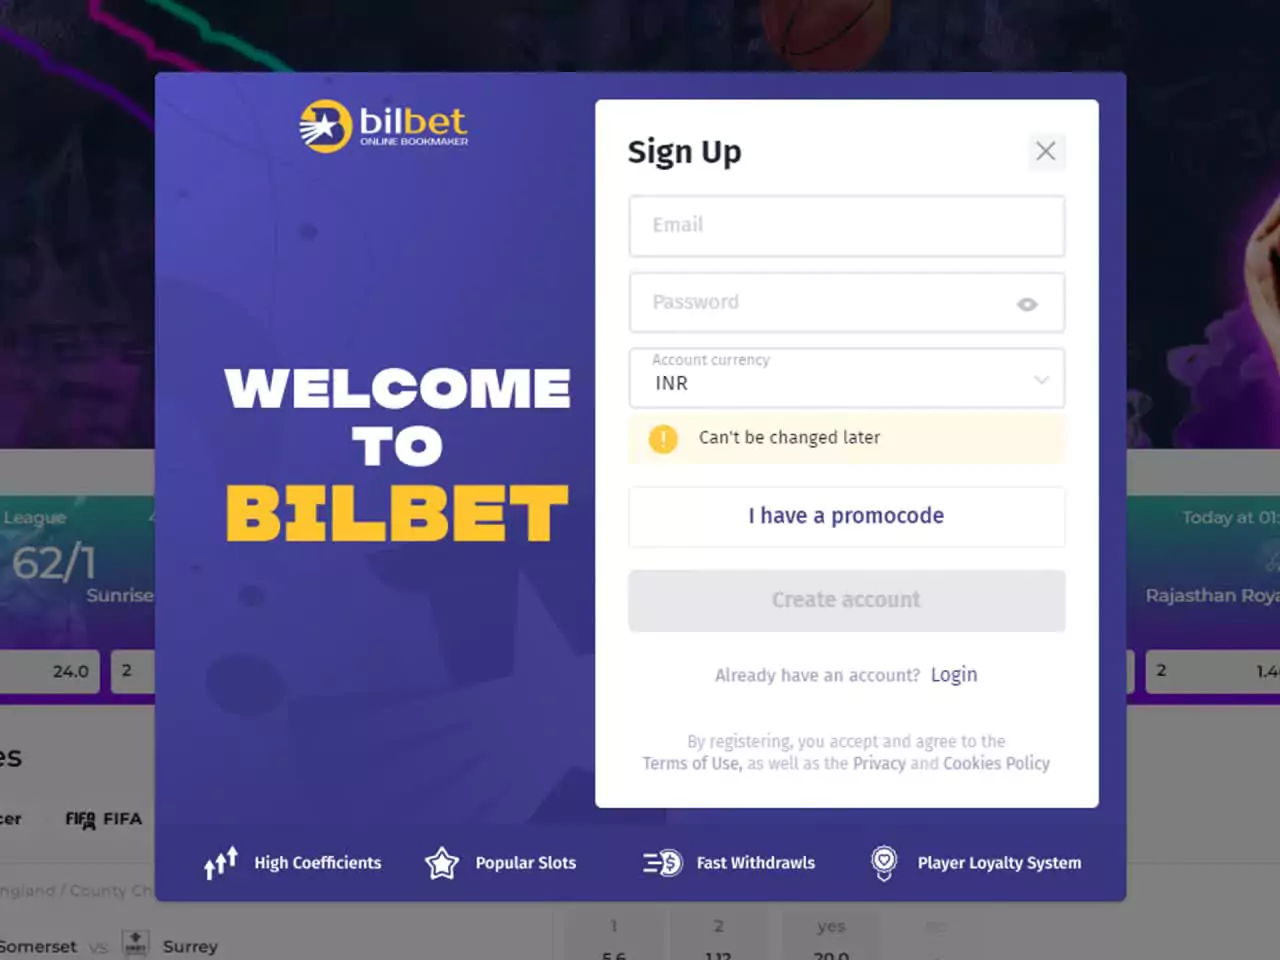 Go to the Bilbet official website.